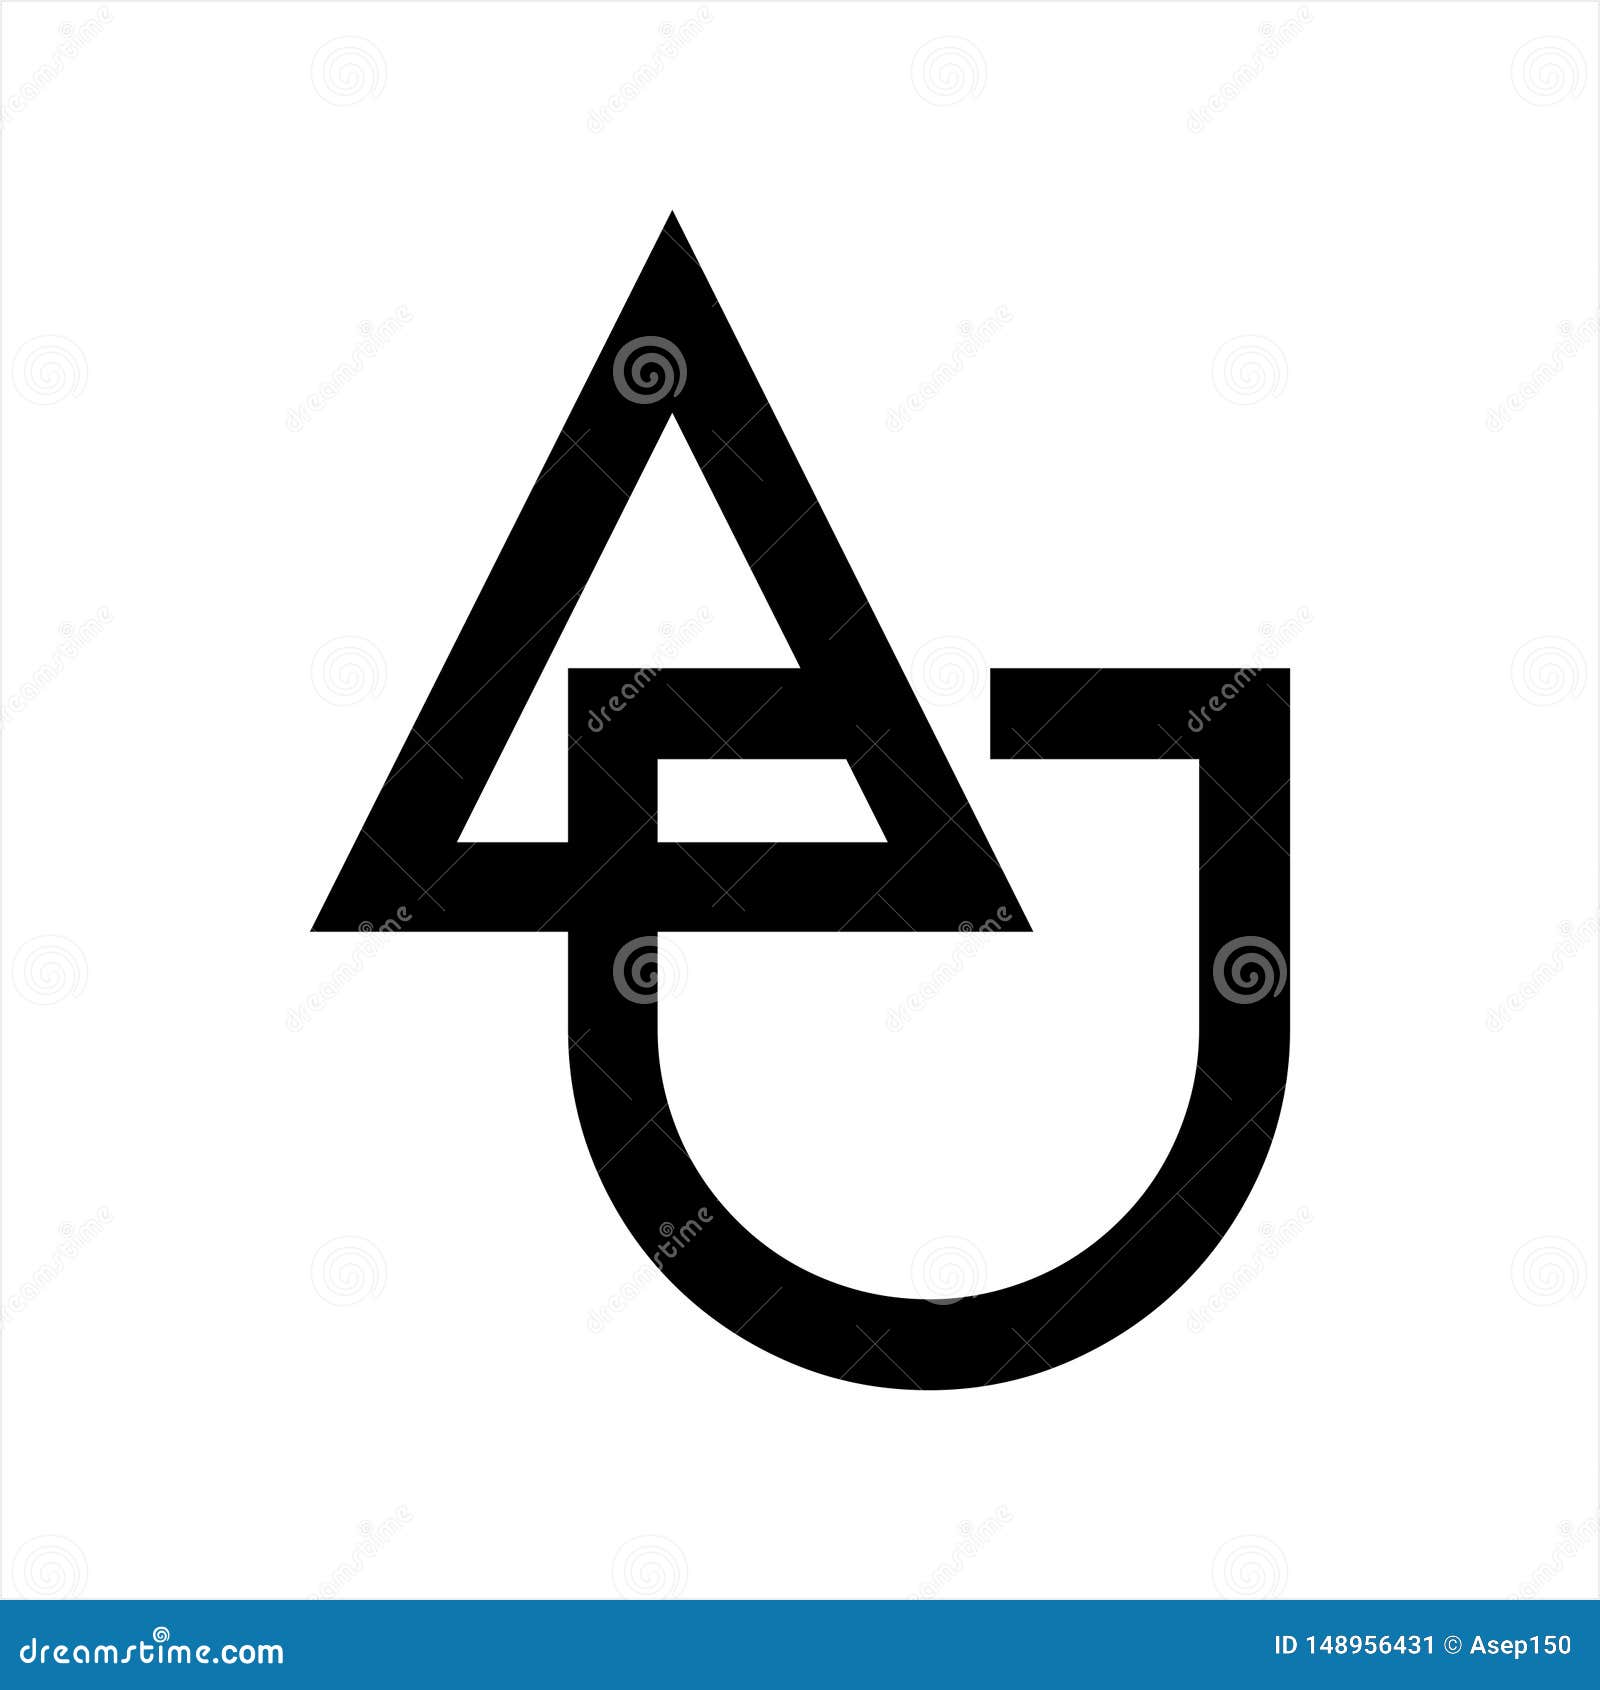 Line Art Au Ua Jua Initials Geometric Company Logo Stock Vector Illustration Of Letter Creative